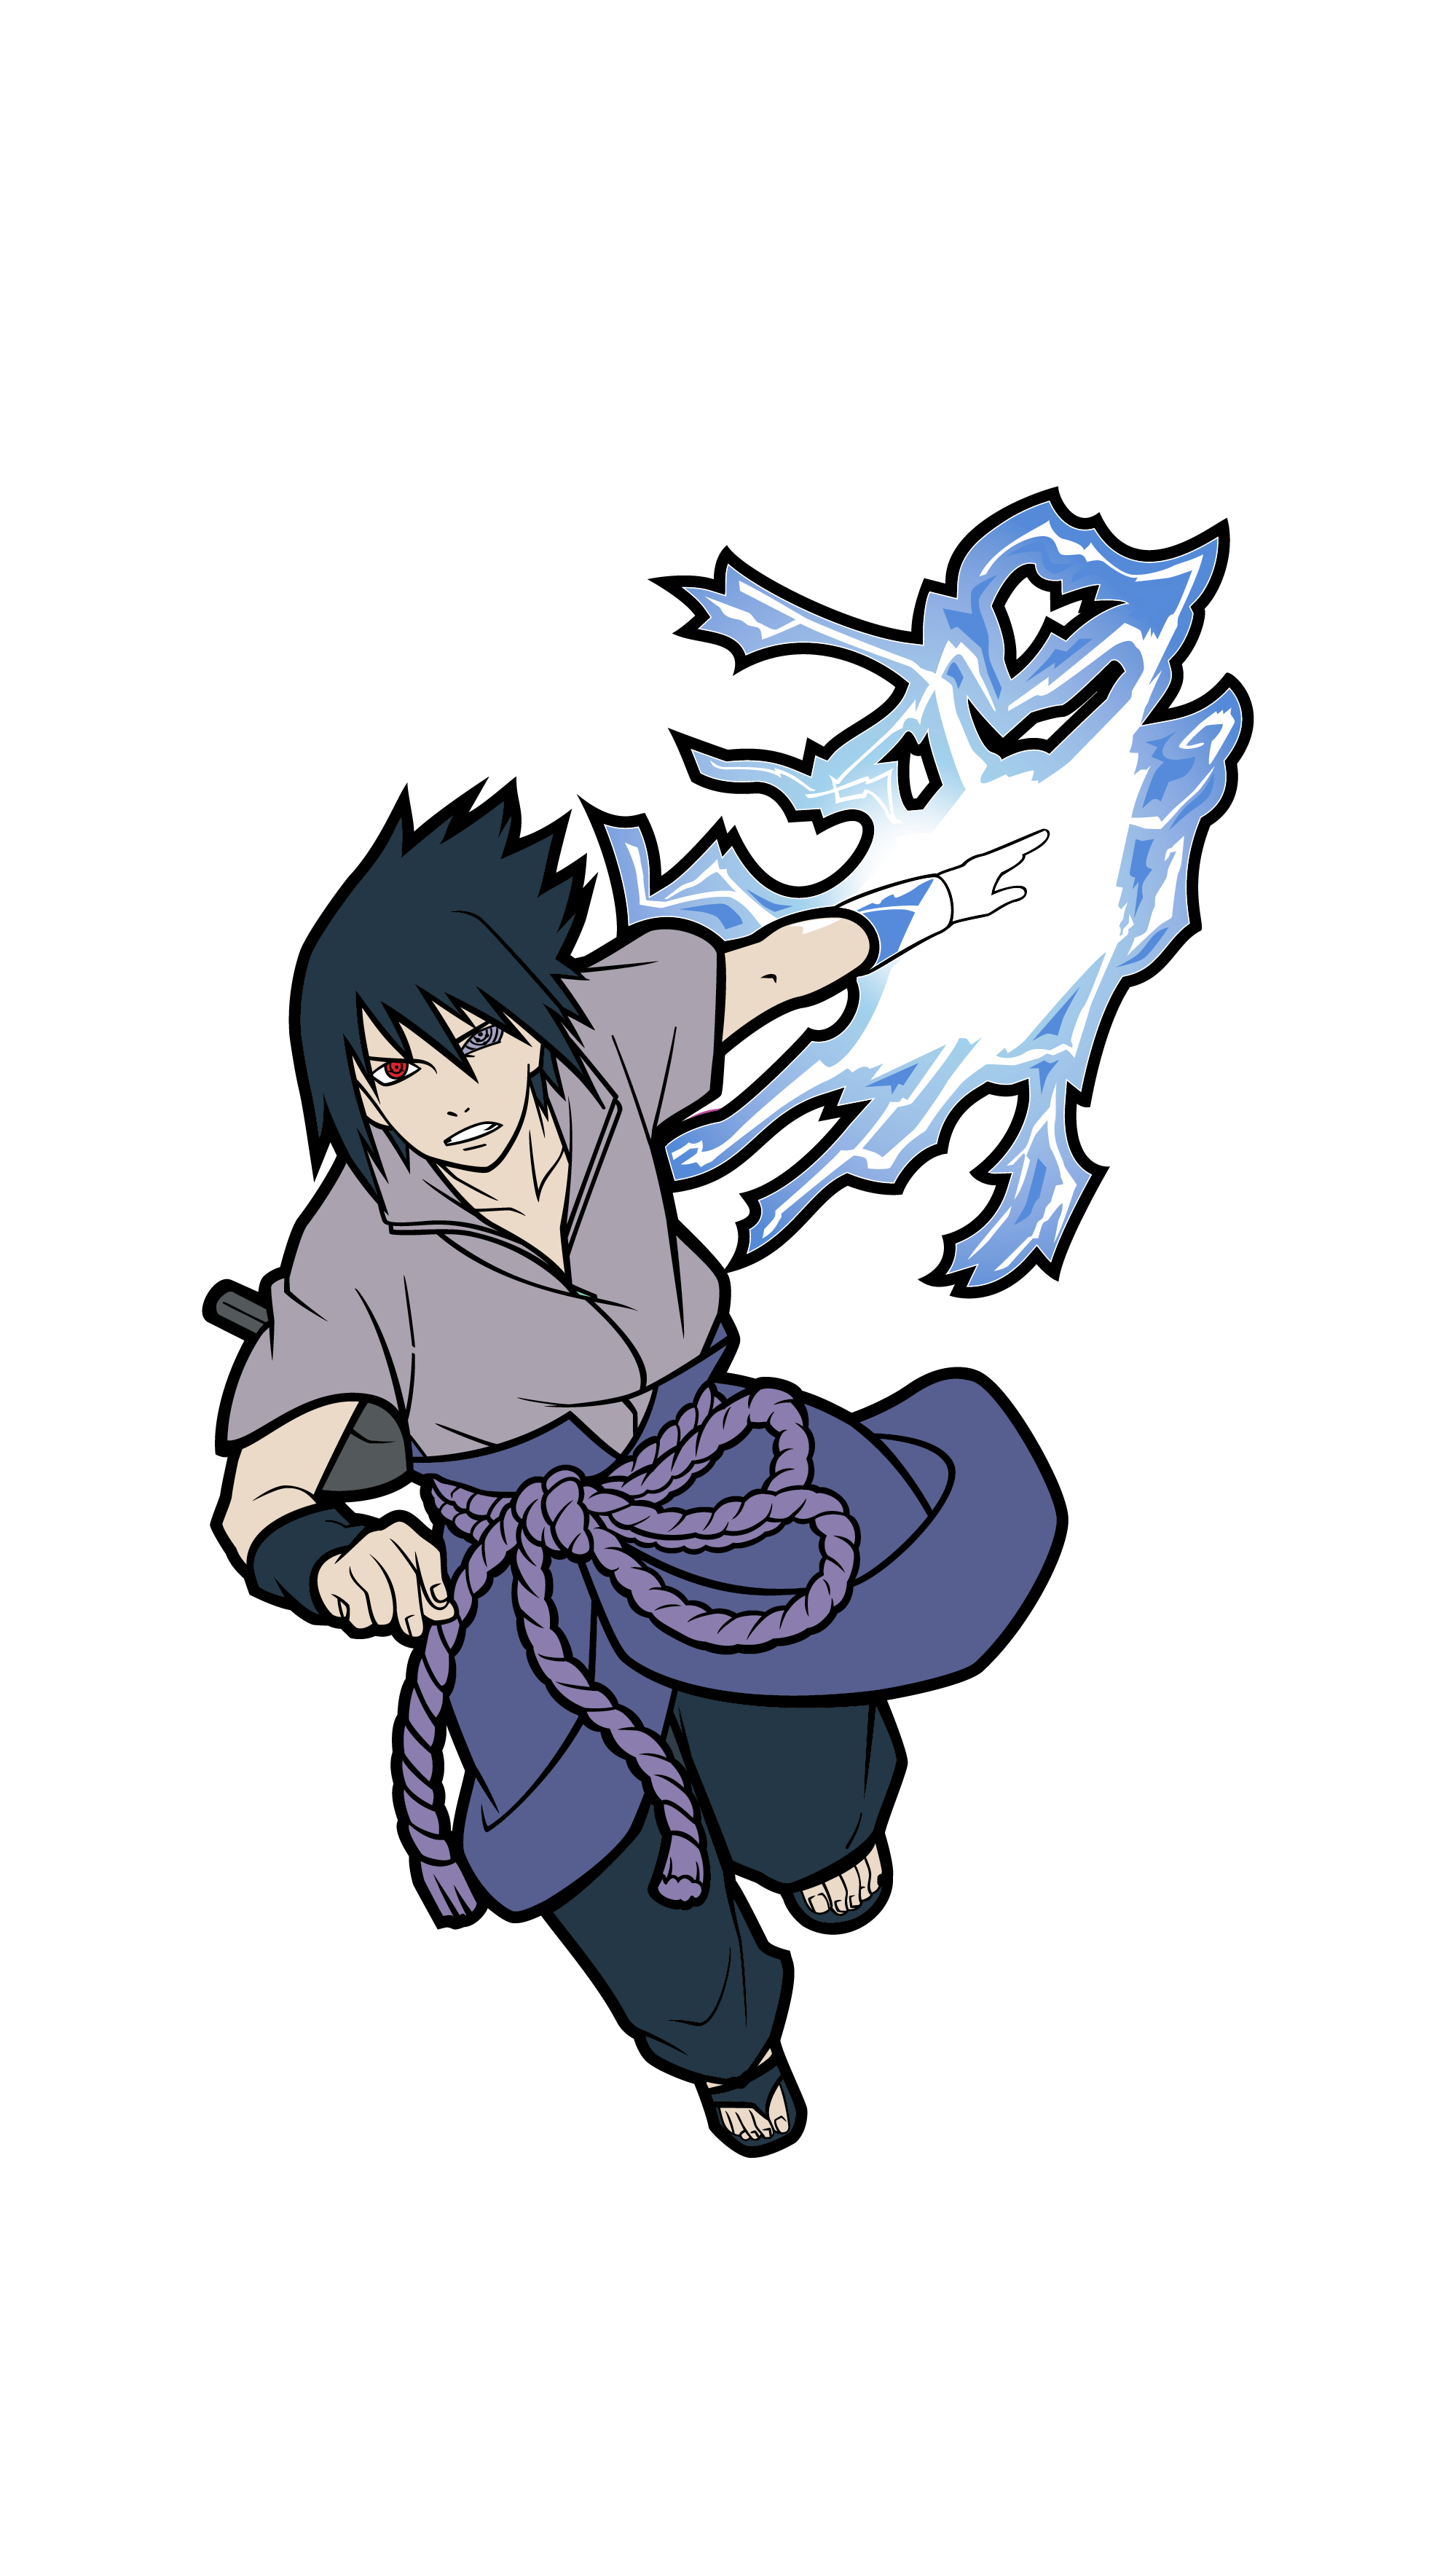 Sasuke (1042)